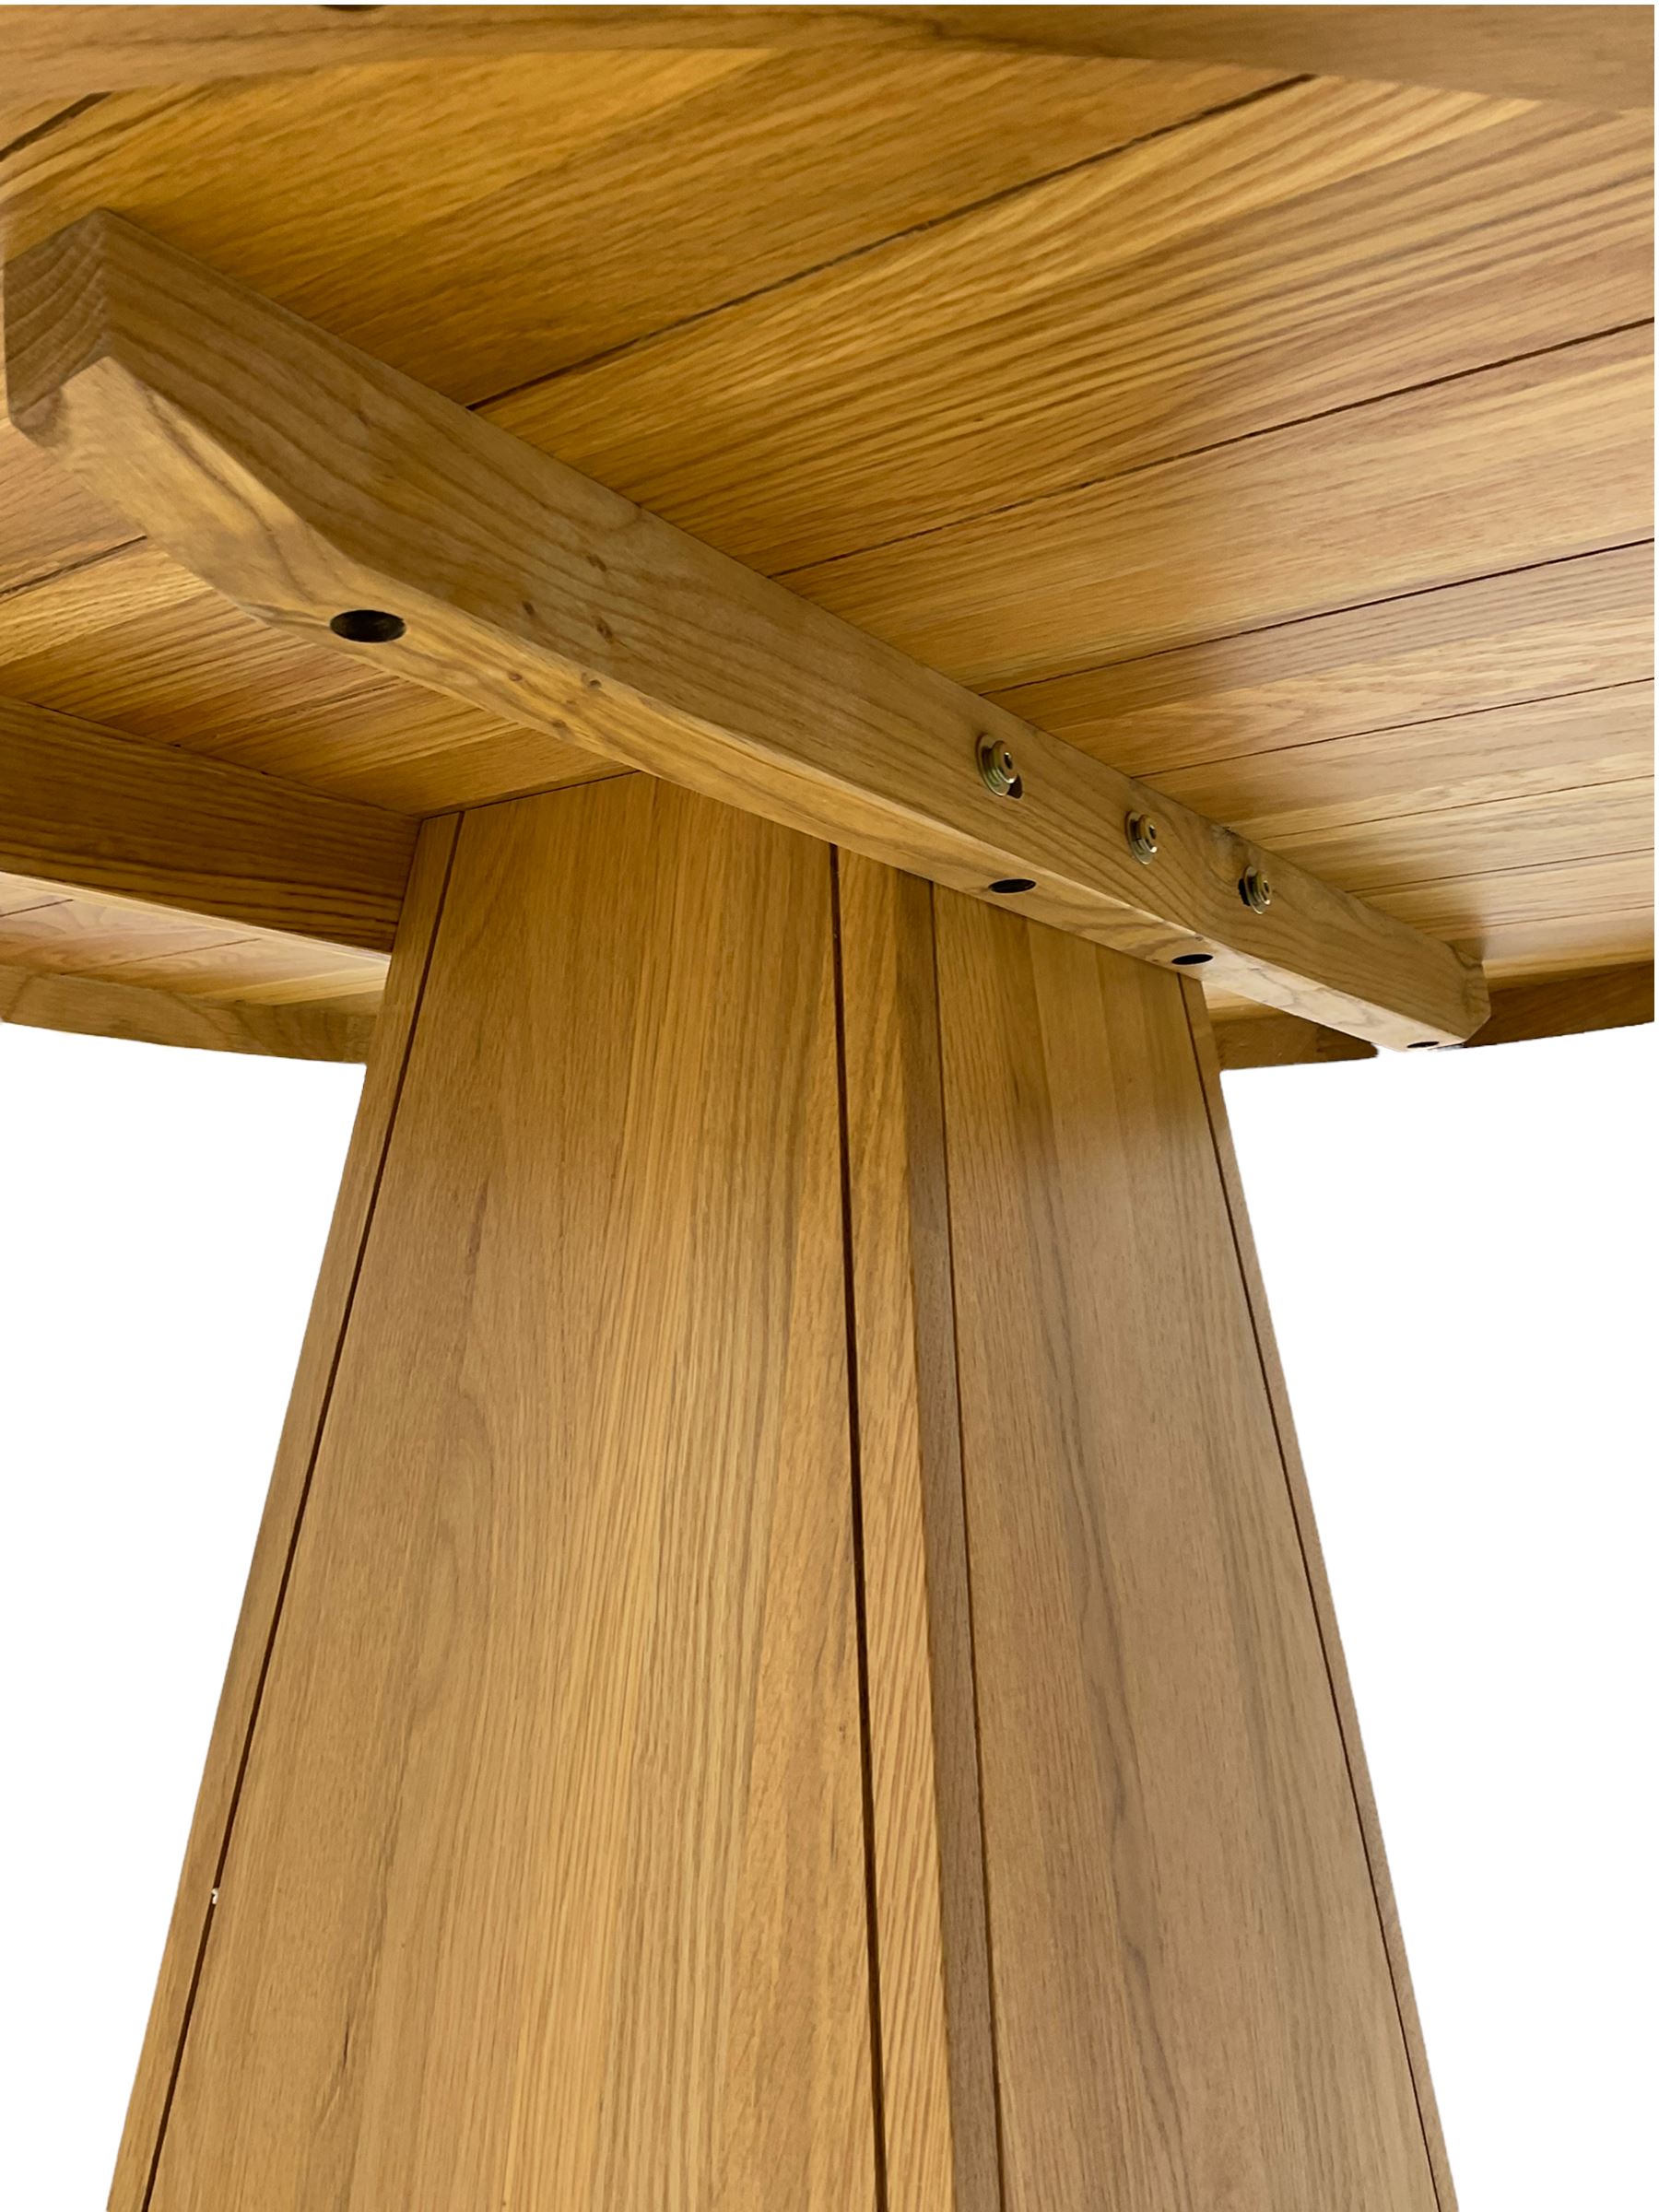 Light oak circular dining table - Image 4 of 5